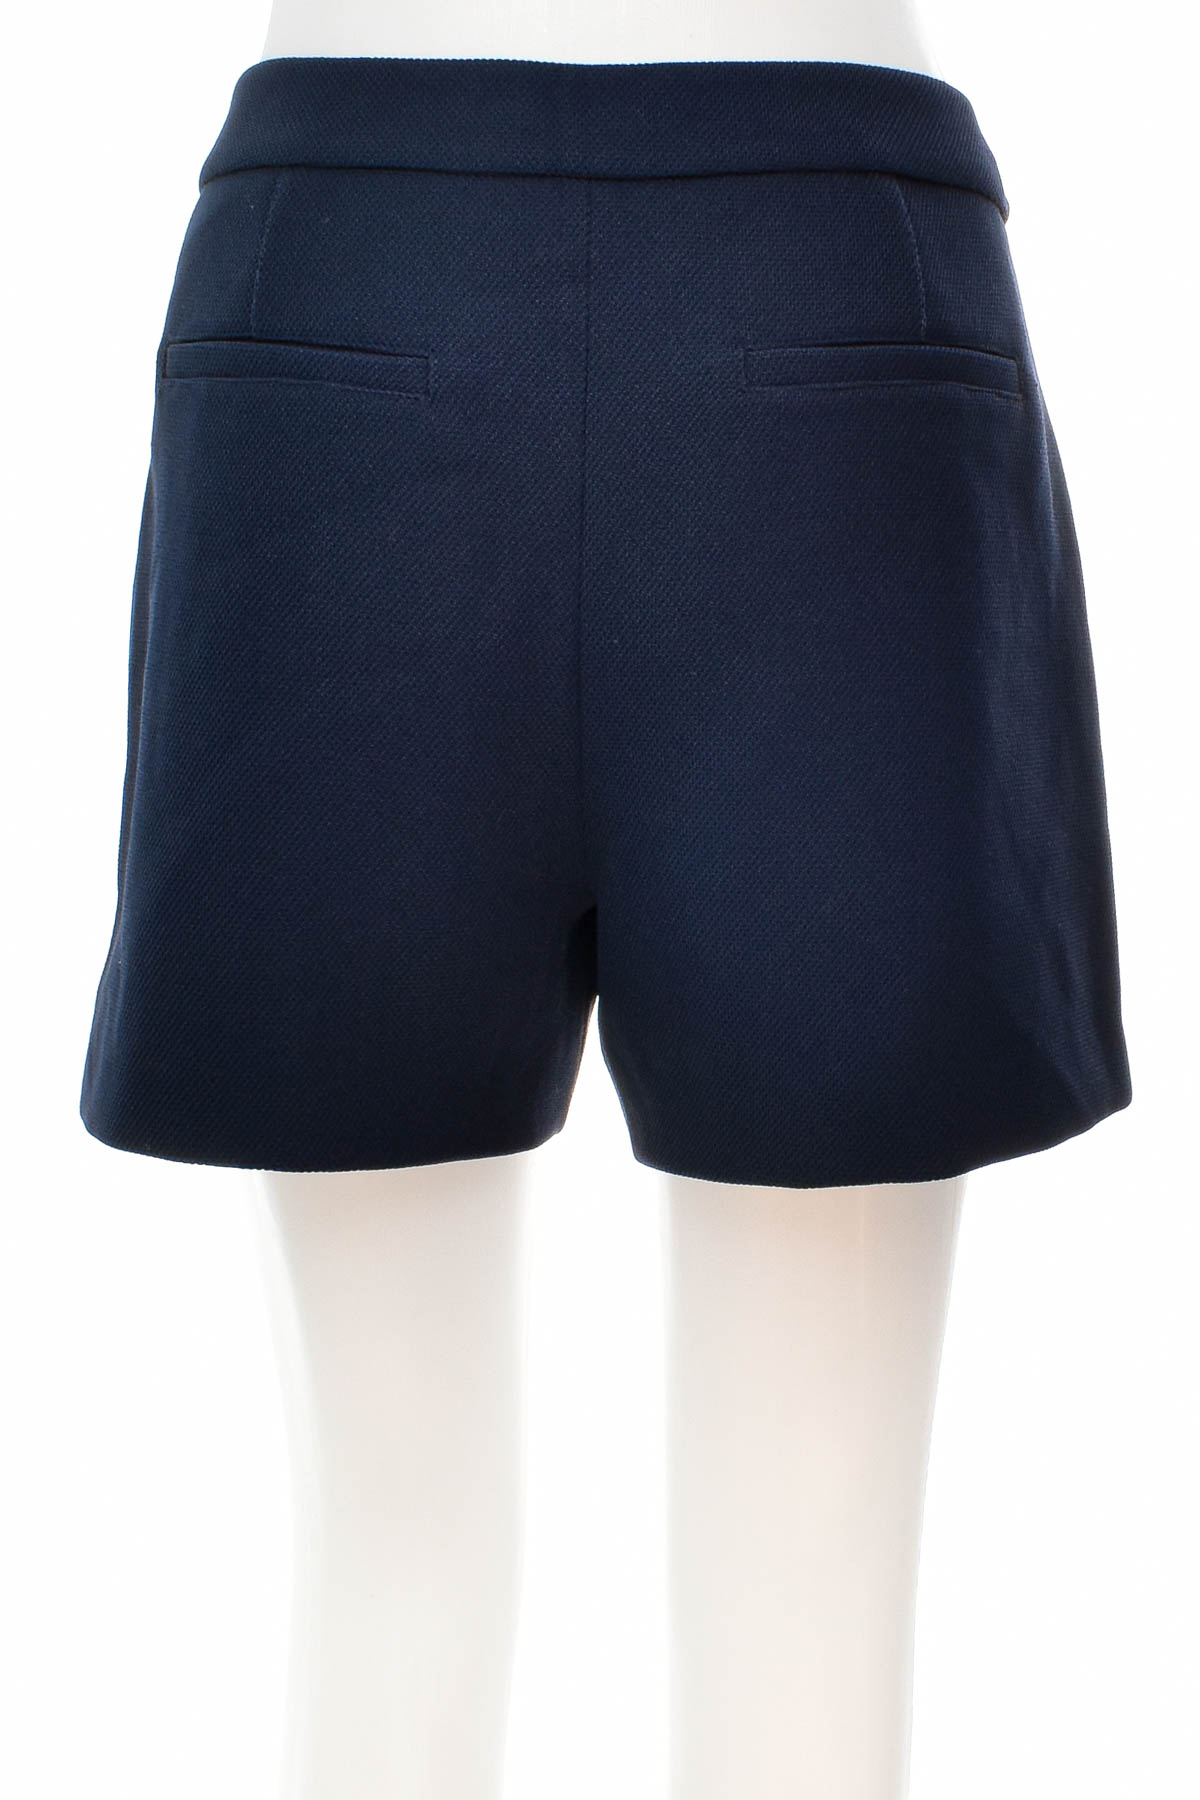 Female shorts - Morgan - 1